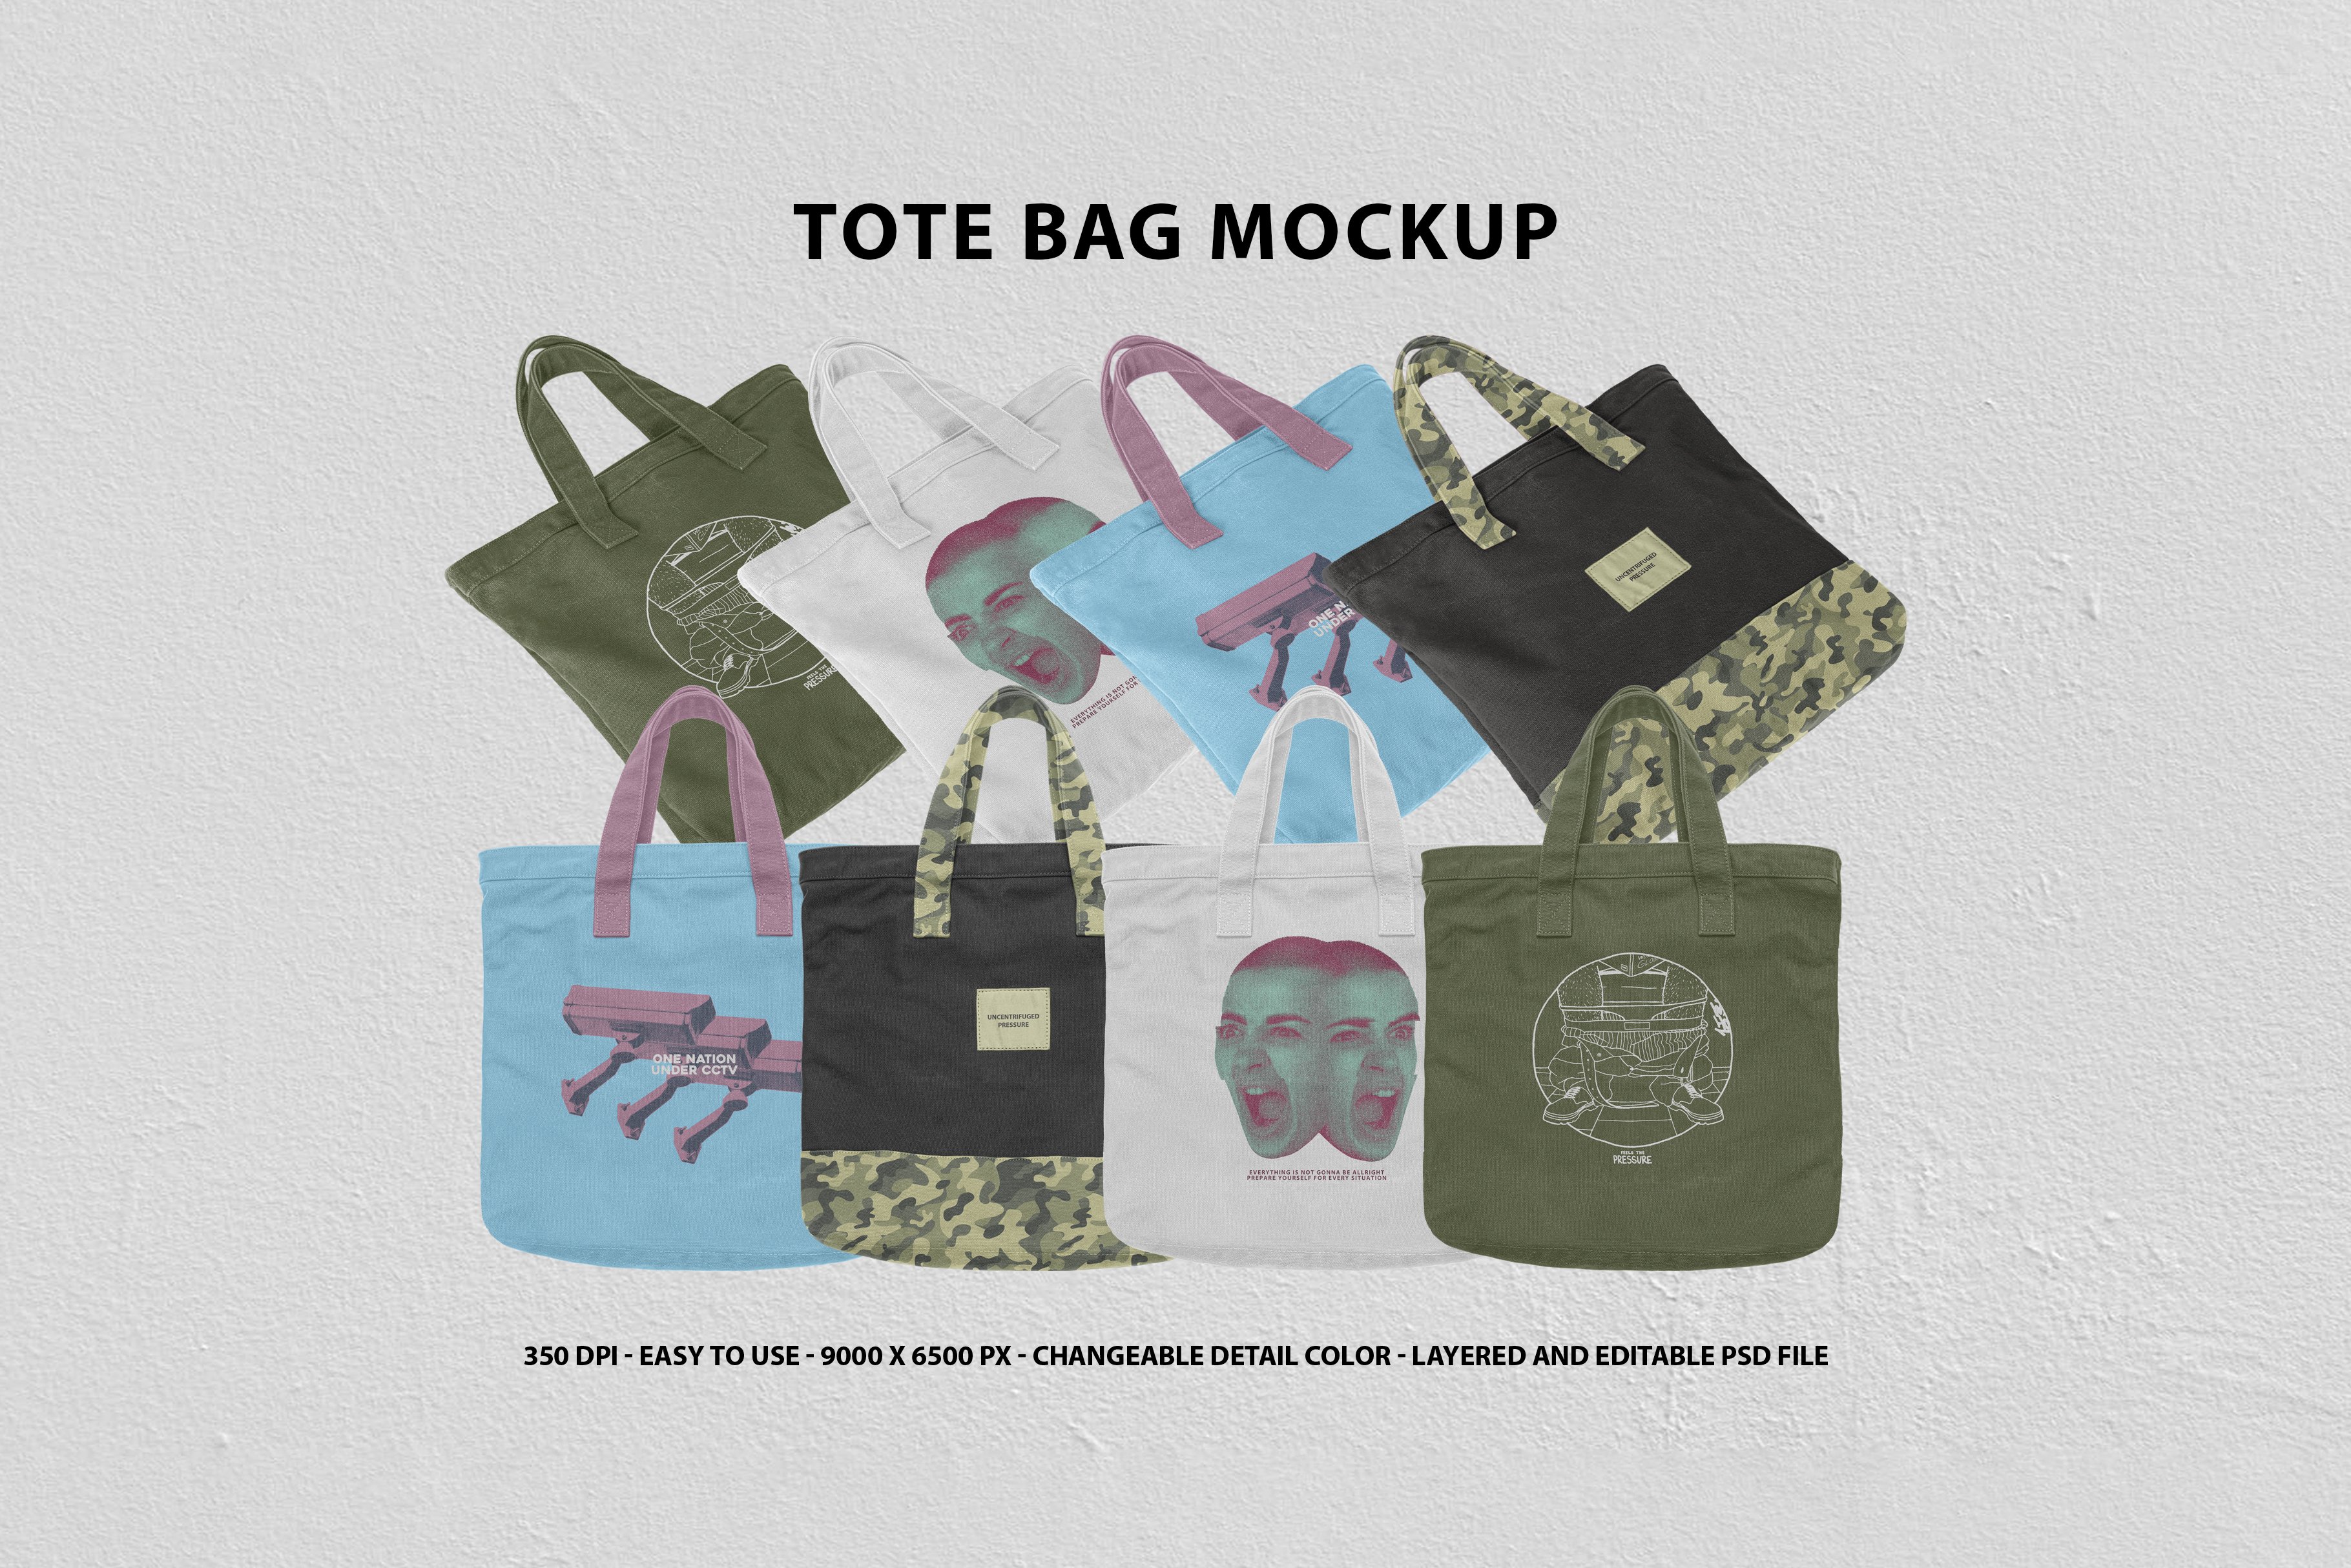 Tote Bag Mockup cover image.